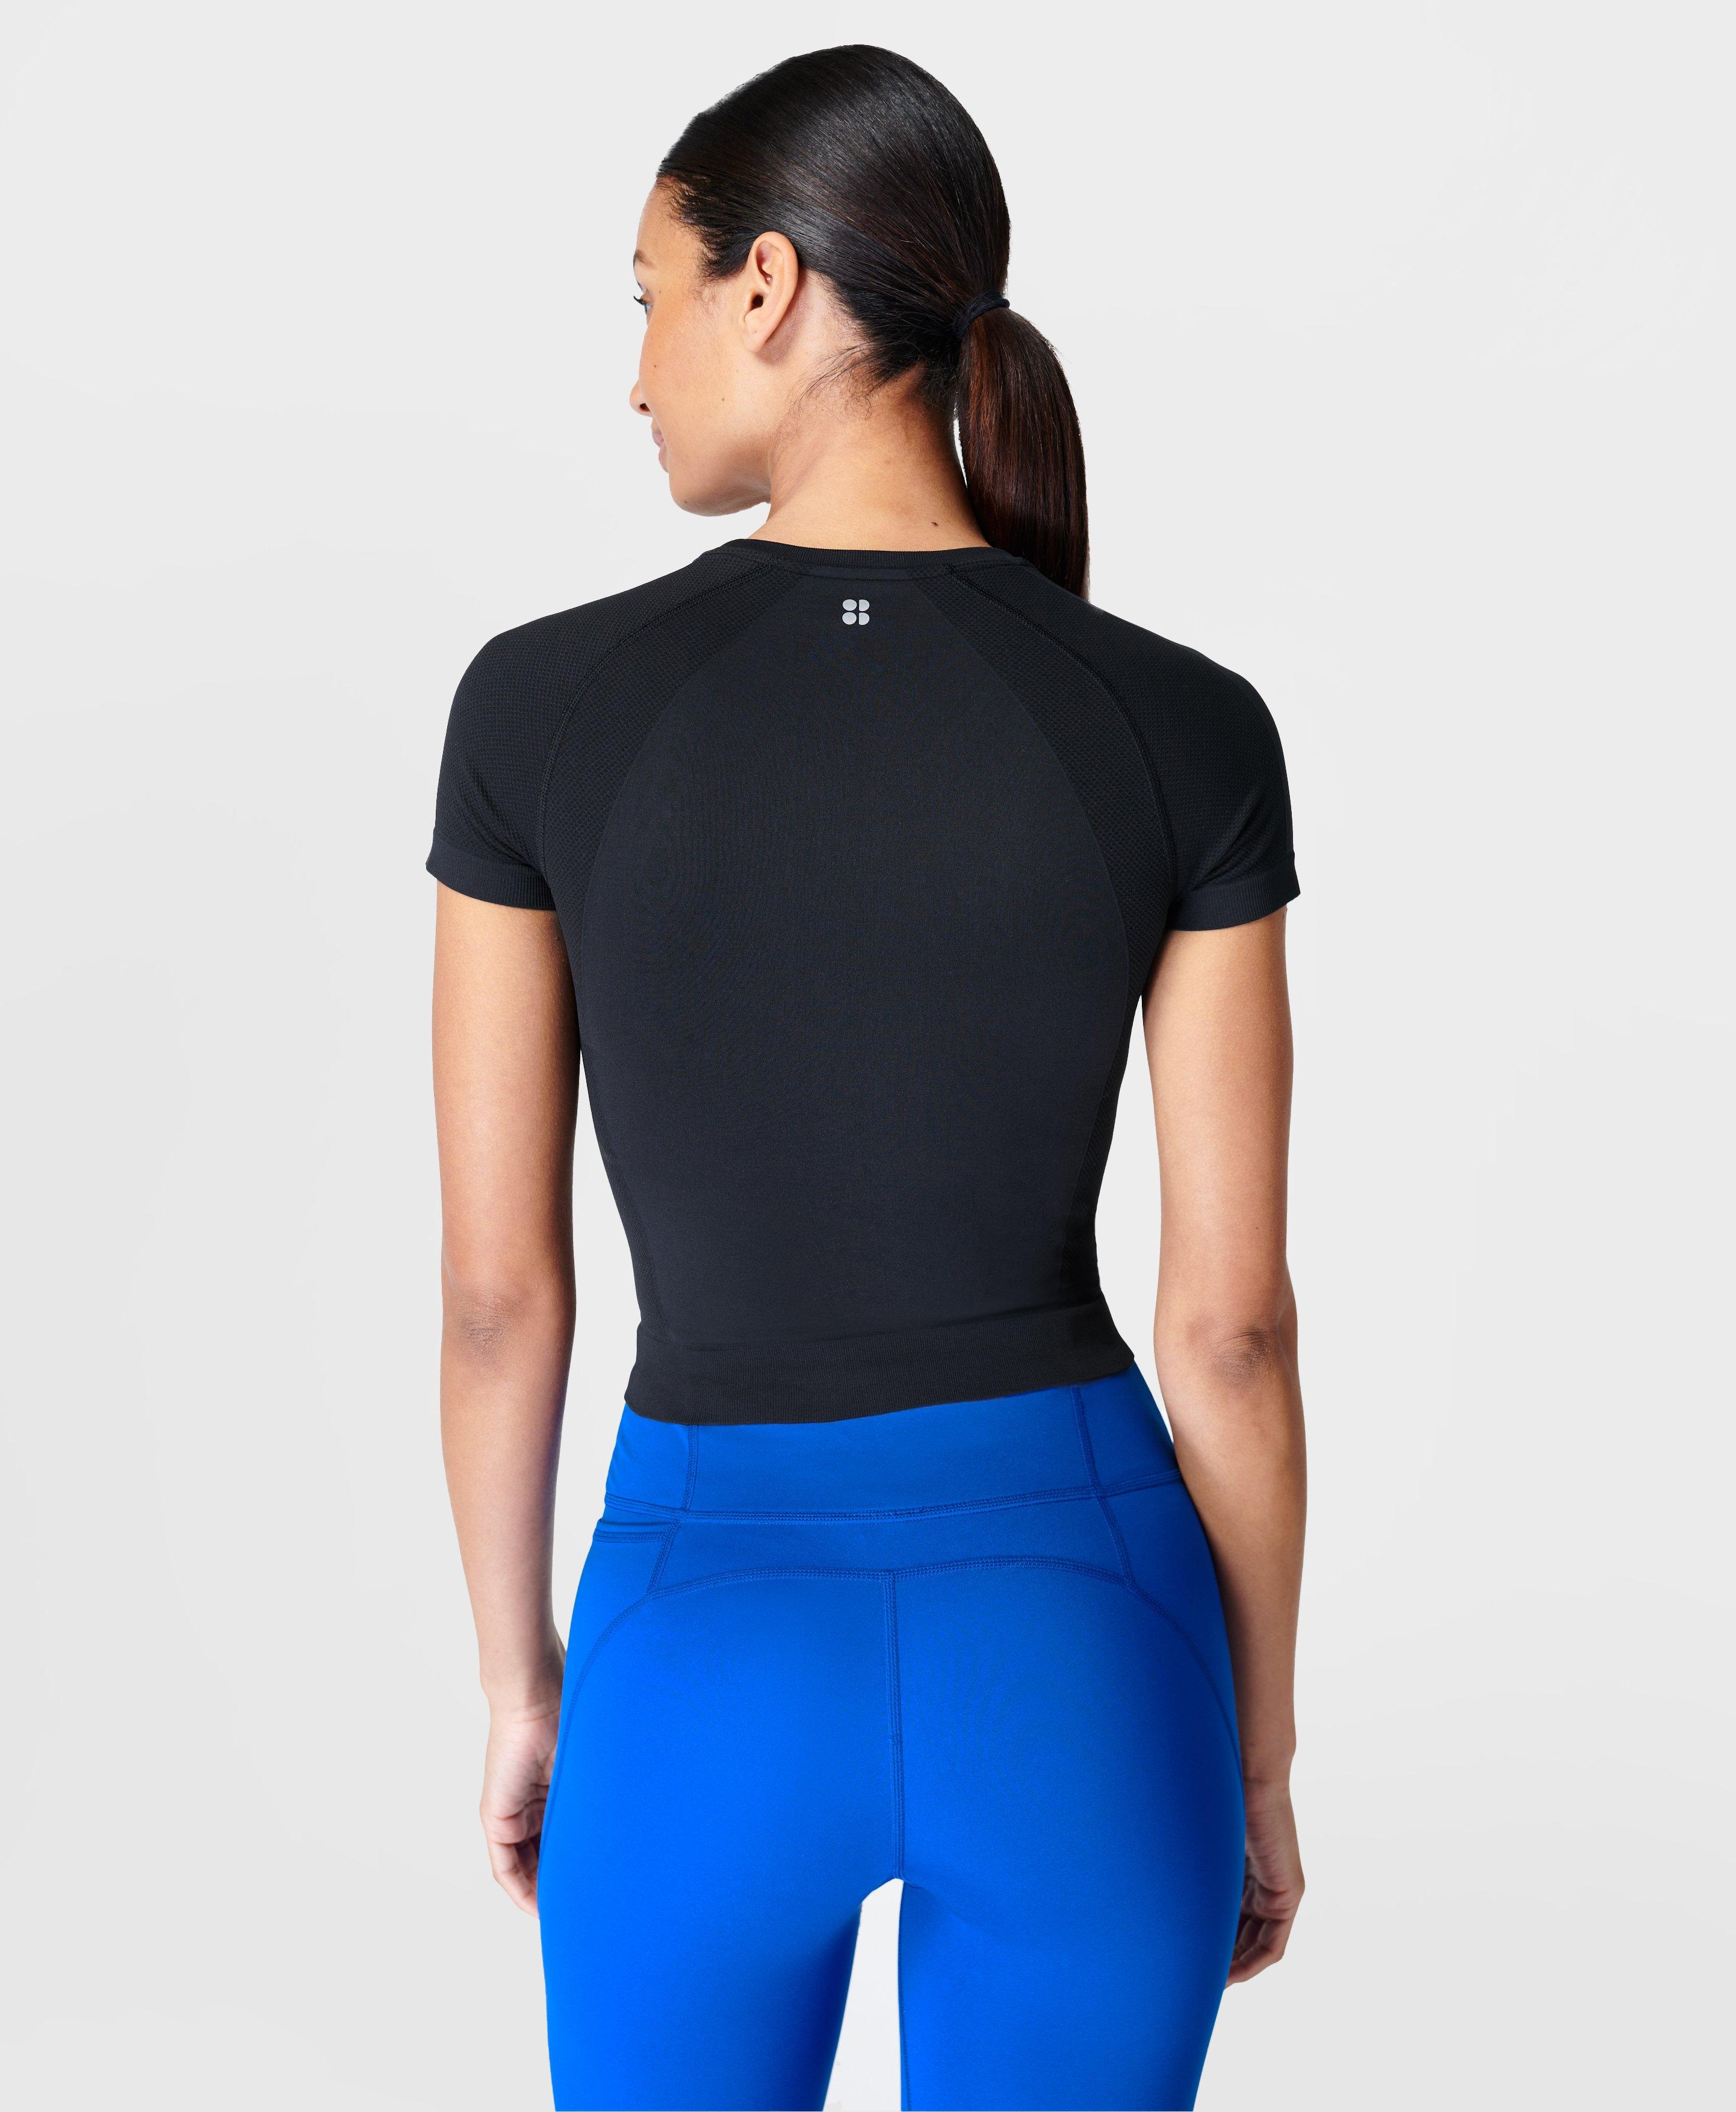 Athlete Crop Seamless Workout Tee - Black, Women's T-Shirts